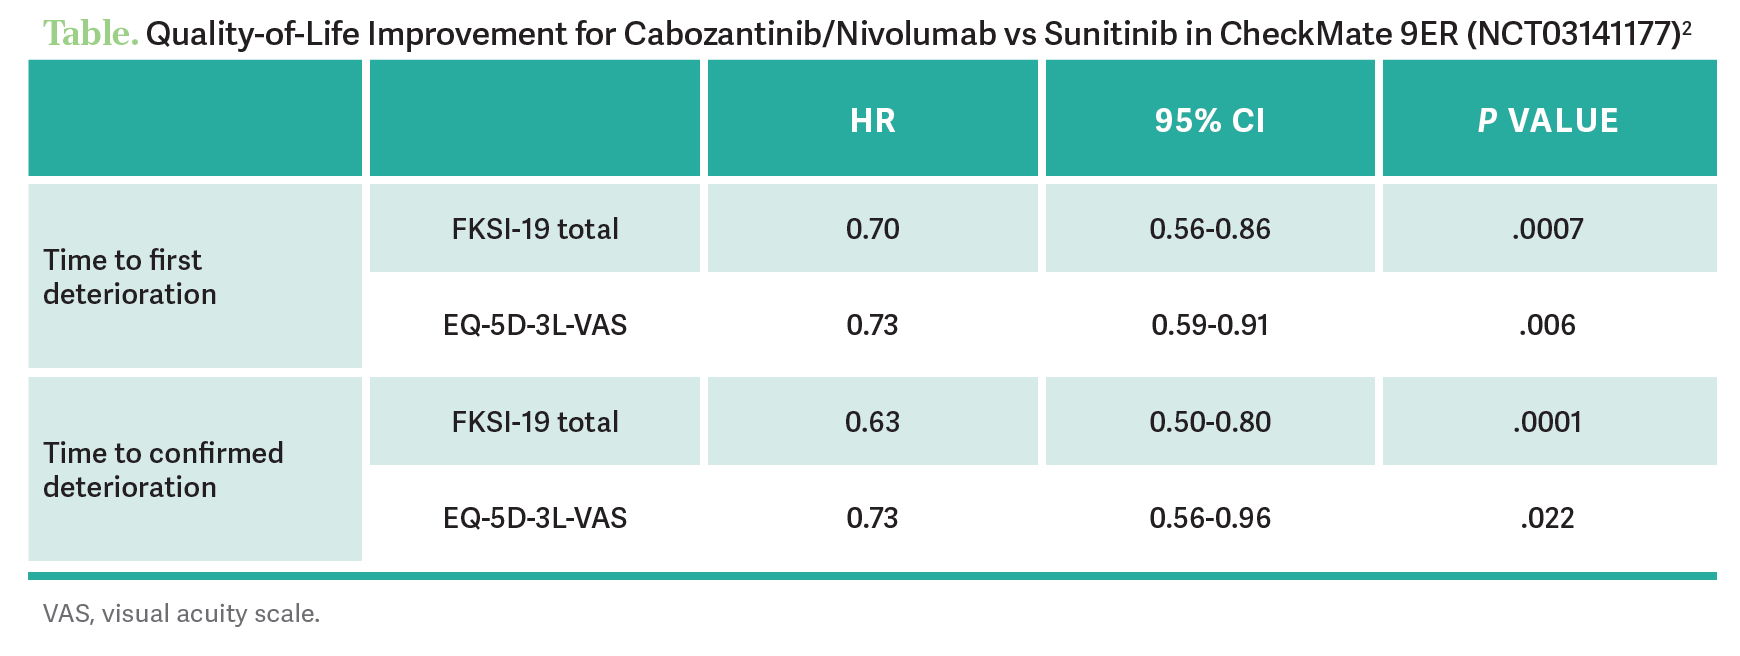 Quality-of-Life Improvement for Cabozantinib/Nivolumab vs Sunitinib in CheckMate 9ER (NCT03141177)